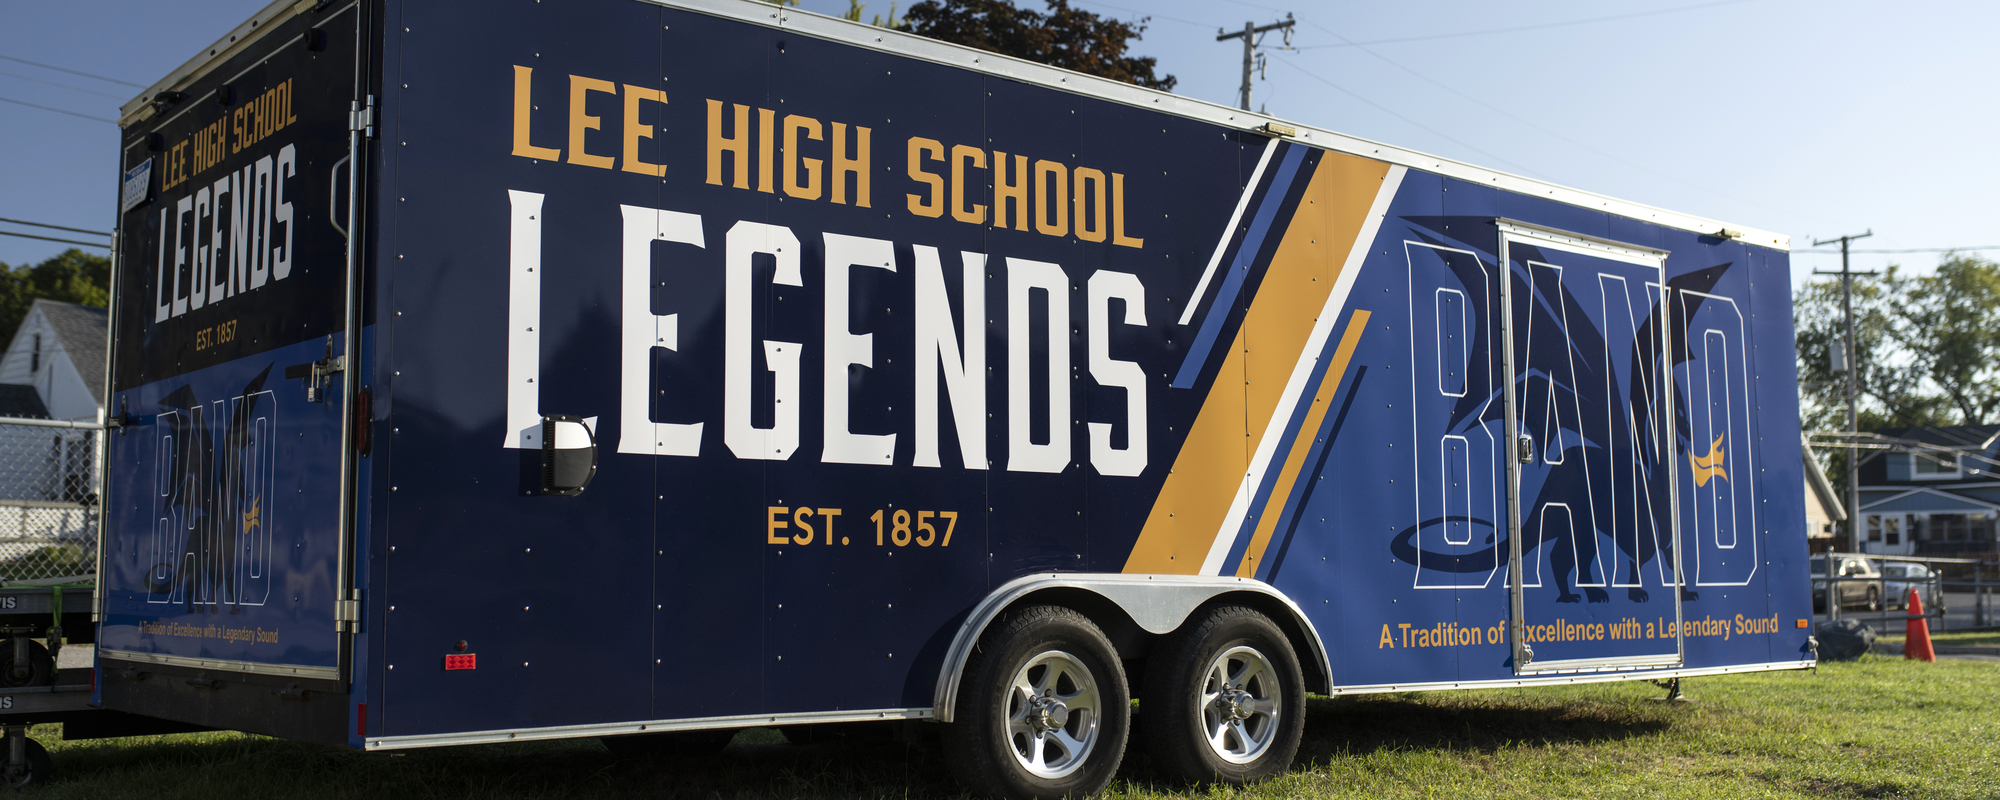 Lee High School Legends Band Trailer